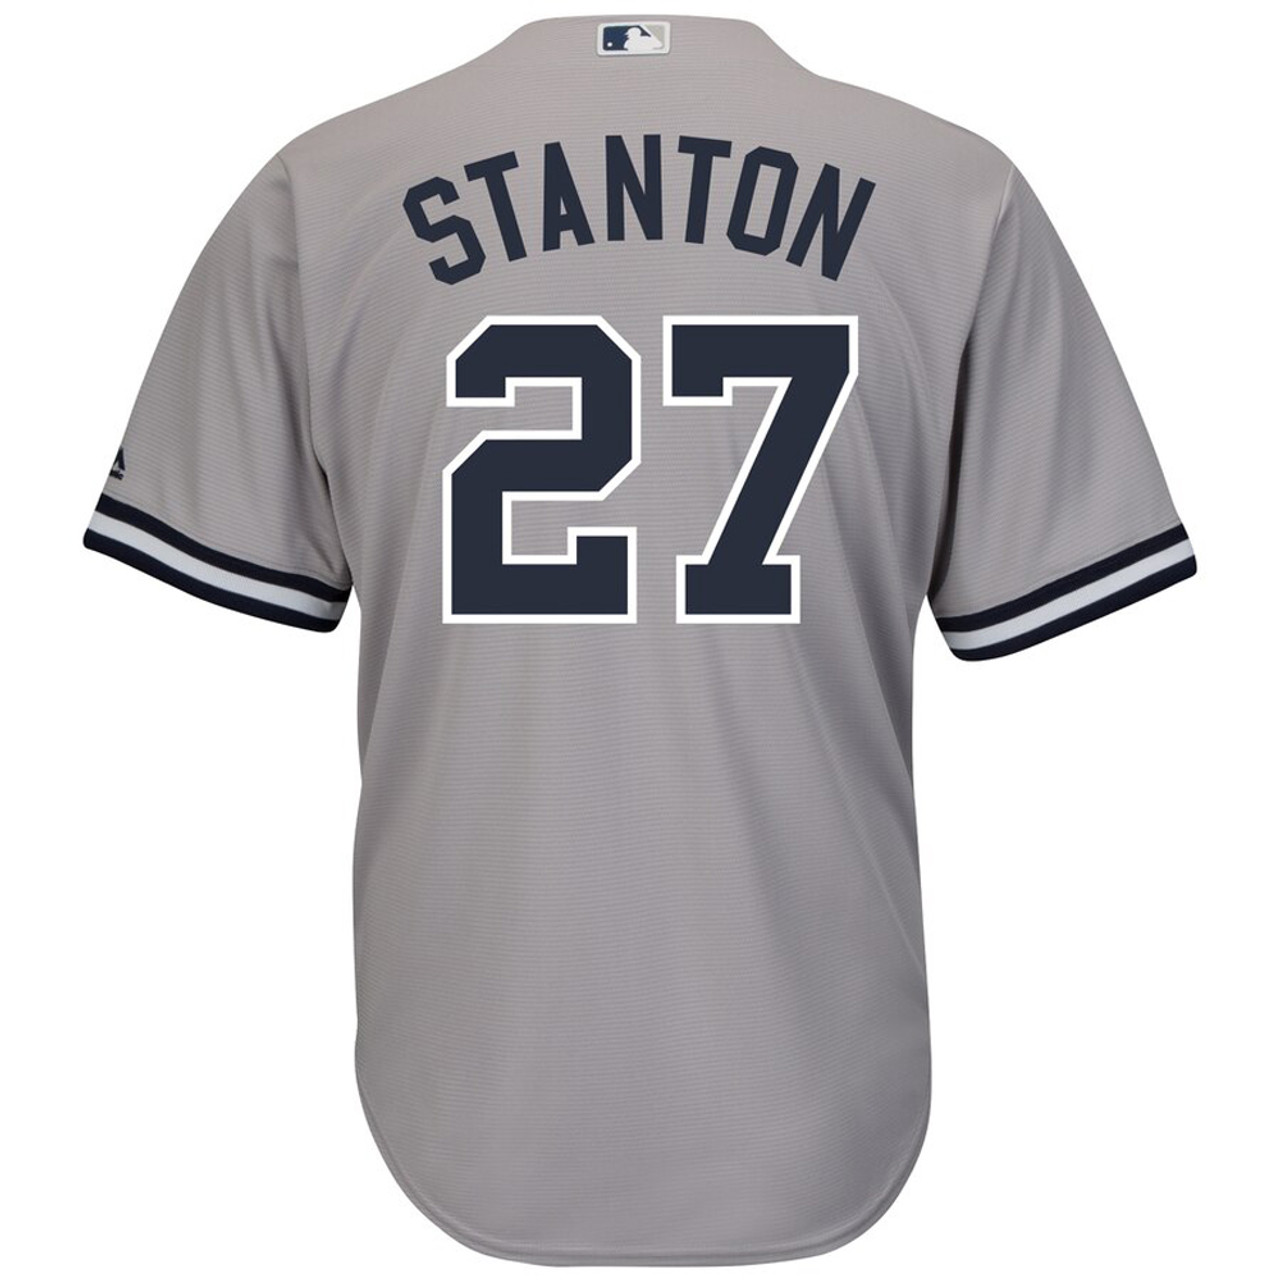 Official Giancarlo Stanton Jersey, Giancarlo Stanton Shirts